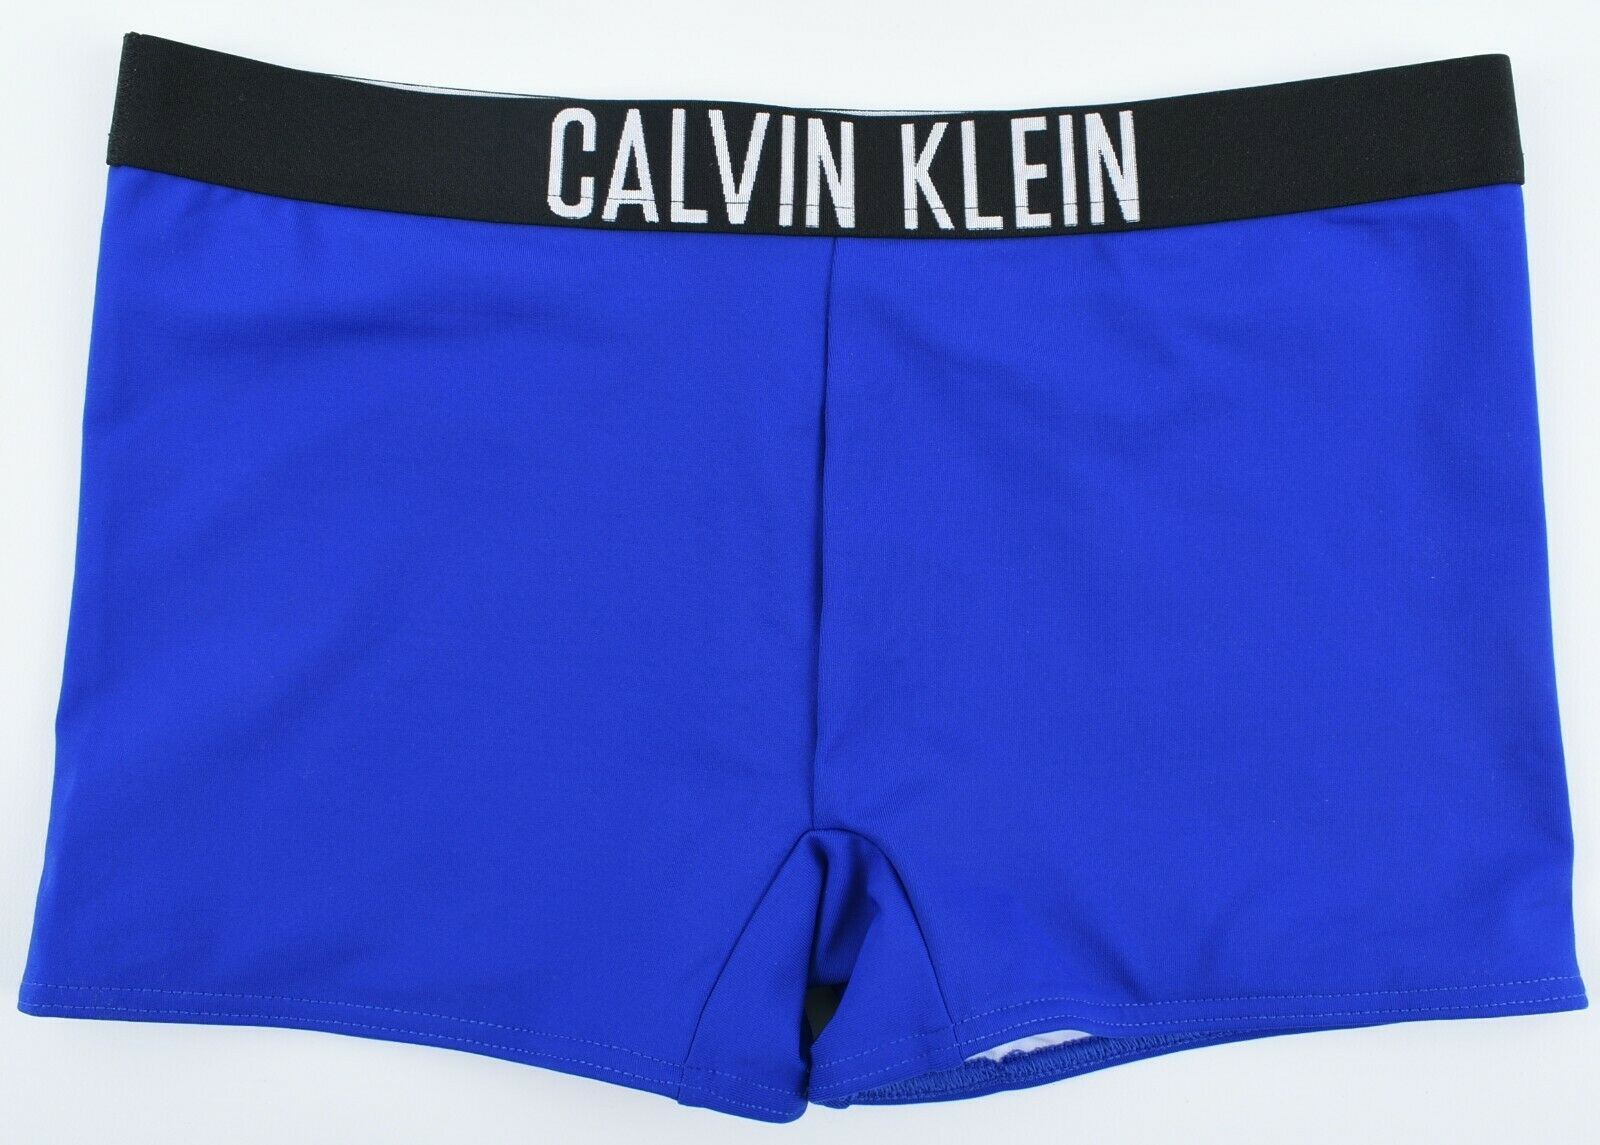 CALVIN KLEIN Swimwear: Boys Kids Intense Power Trunks, Blue, 14-16 years